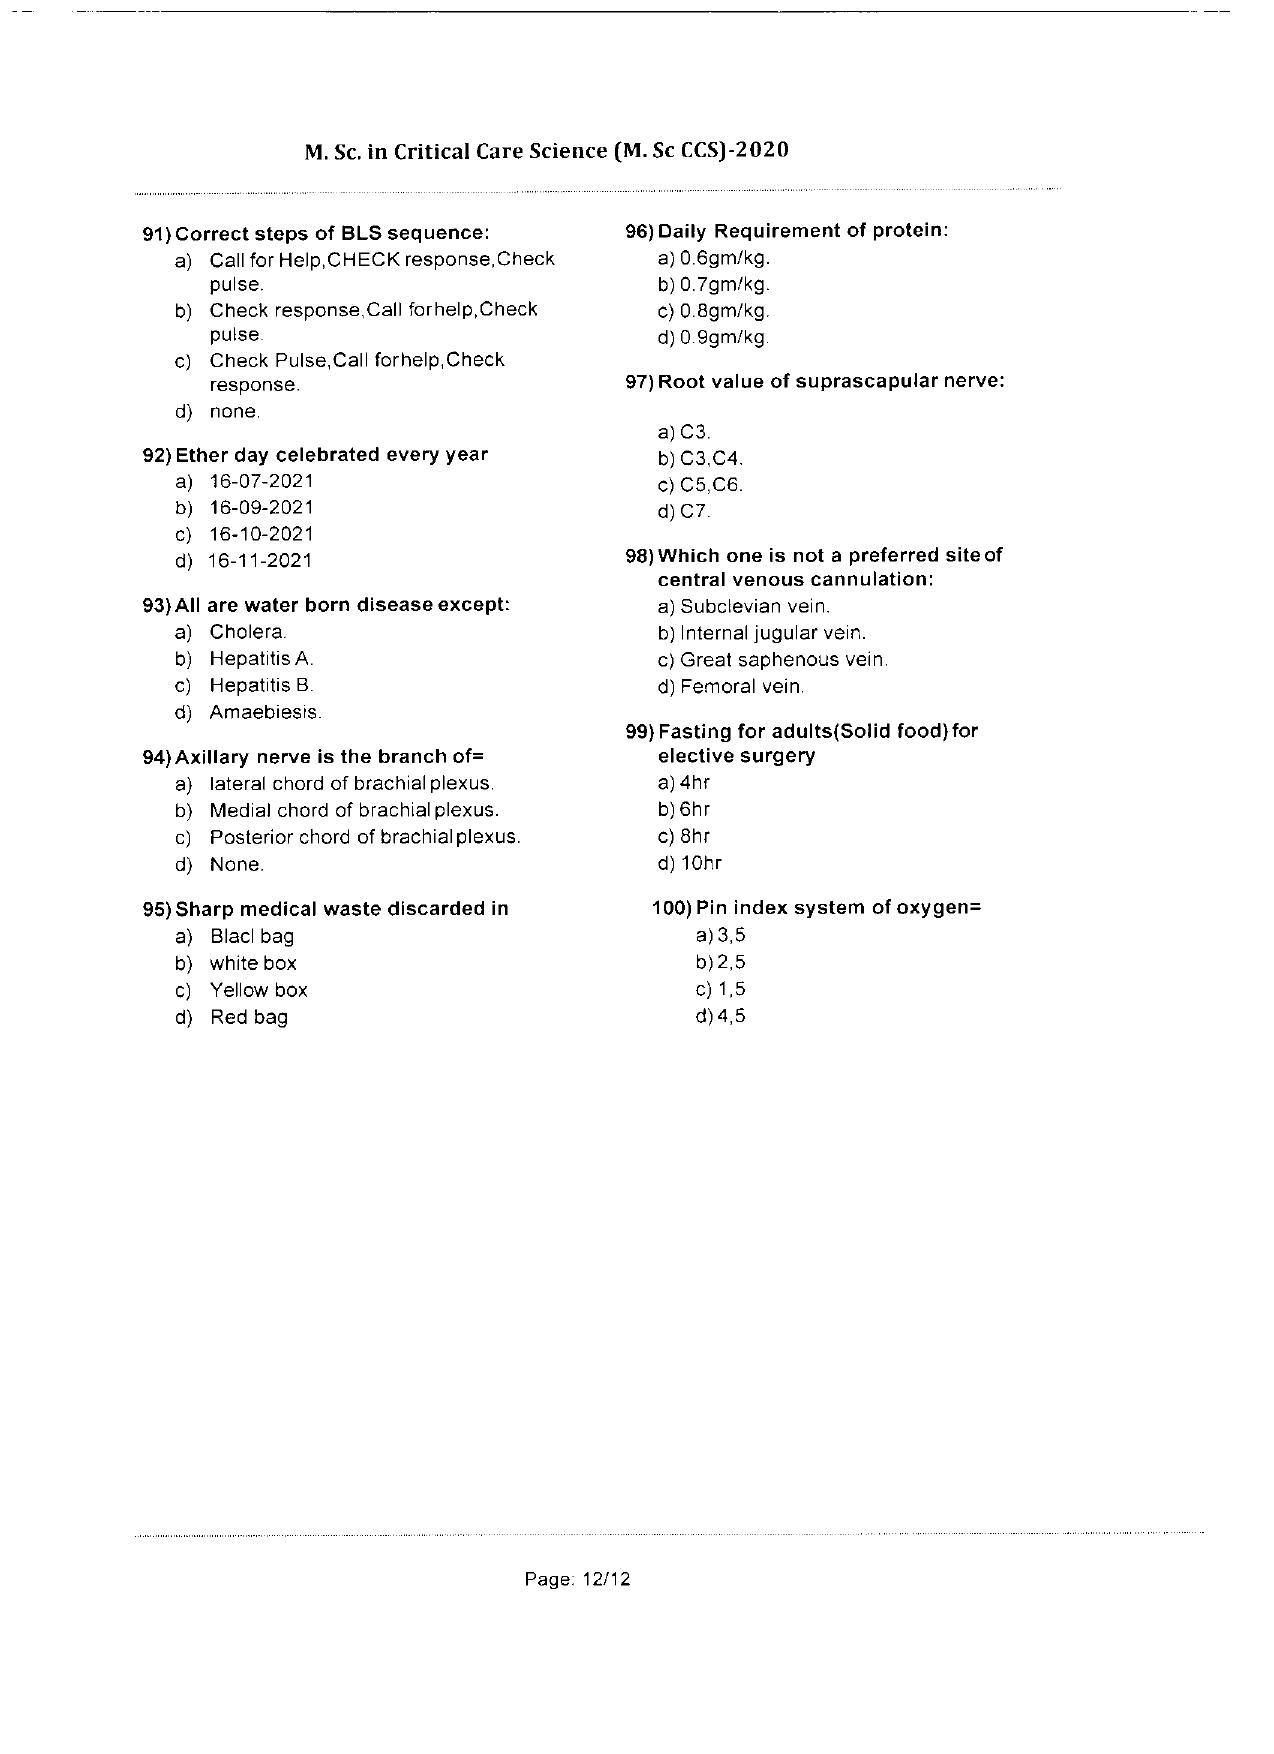 WBJEEB JEMAS (PG) 2020 MSc CCS Question Paper - Page 12